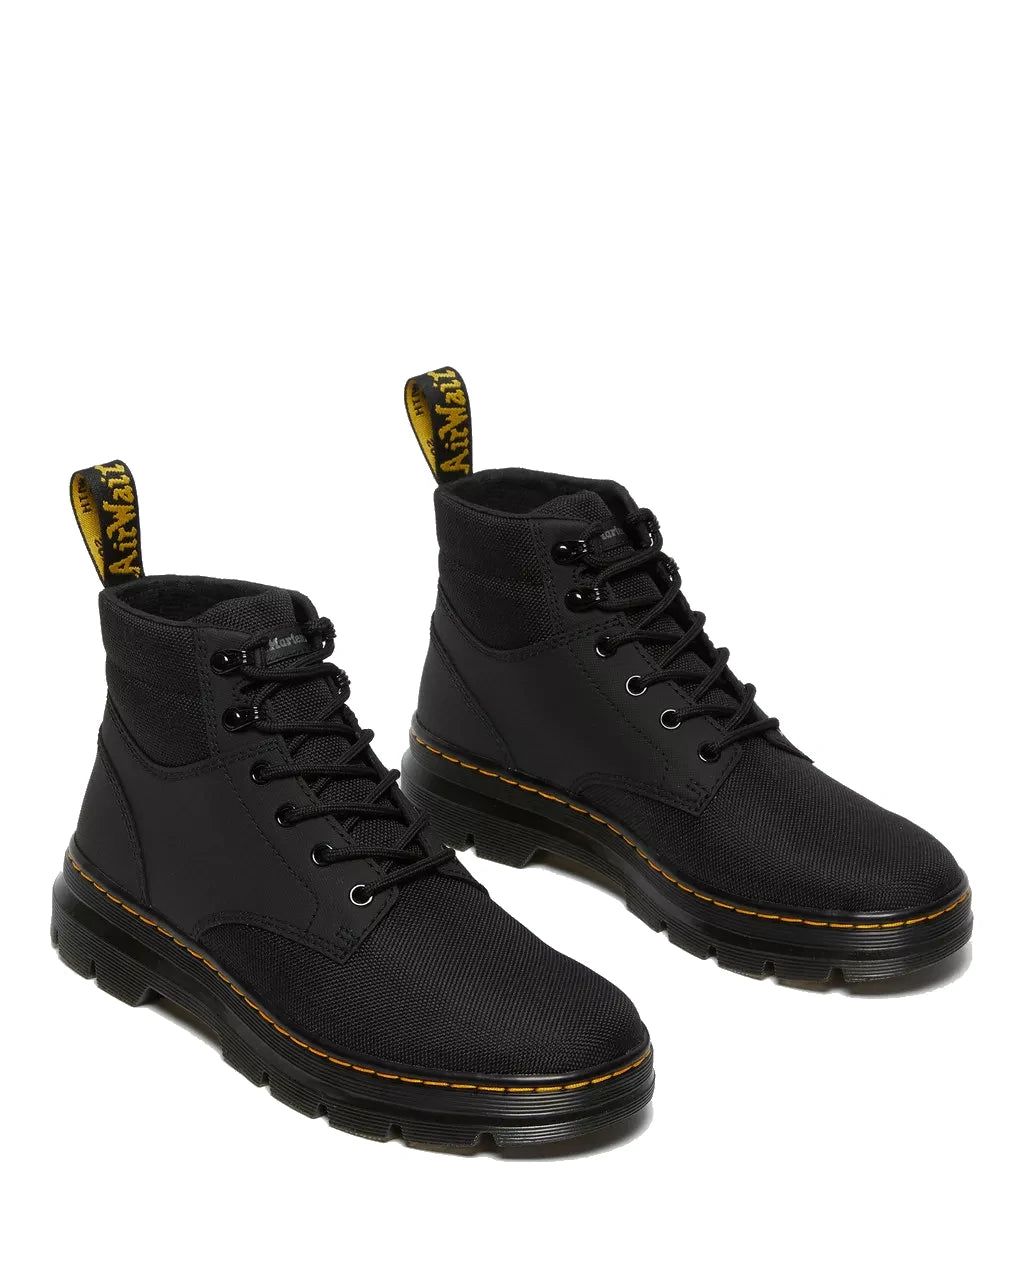 Dr Martens Men's Rakim Utility Chukka Boots - Black